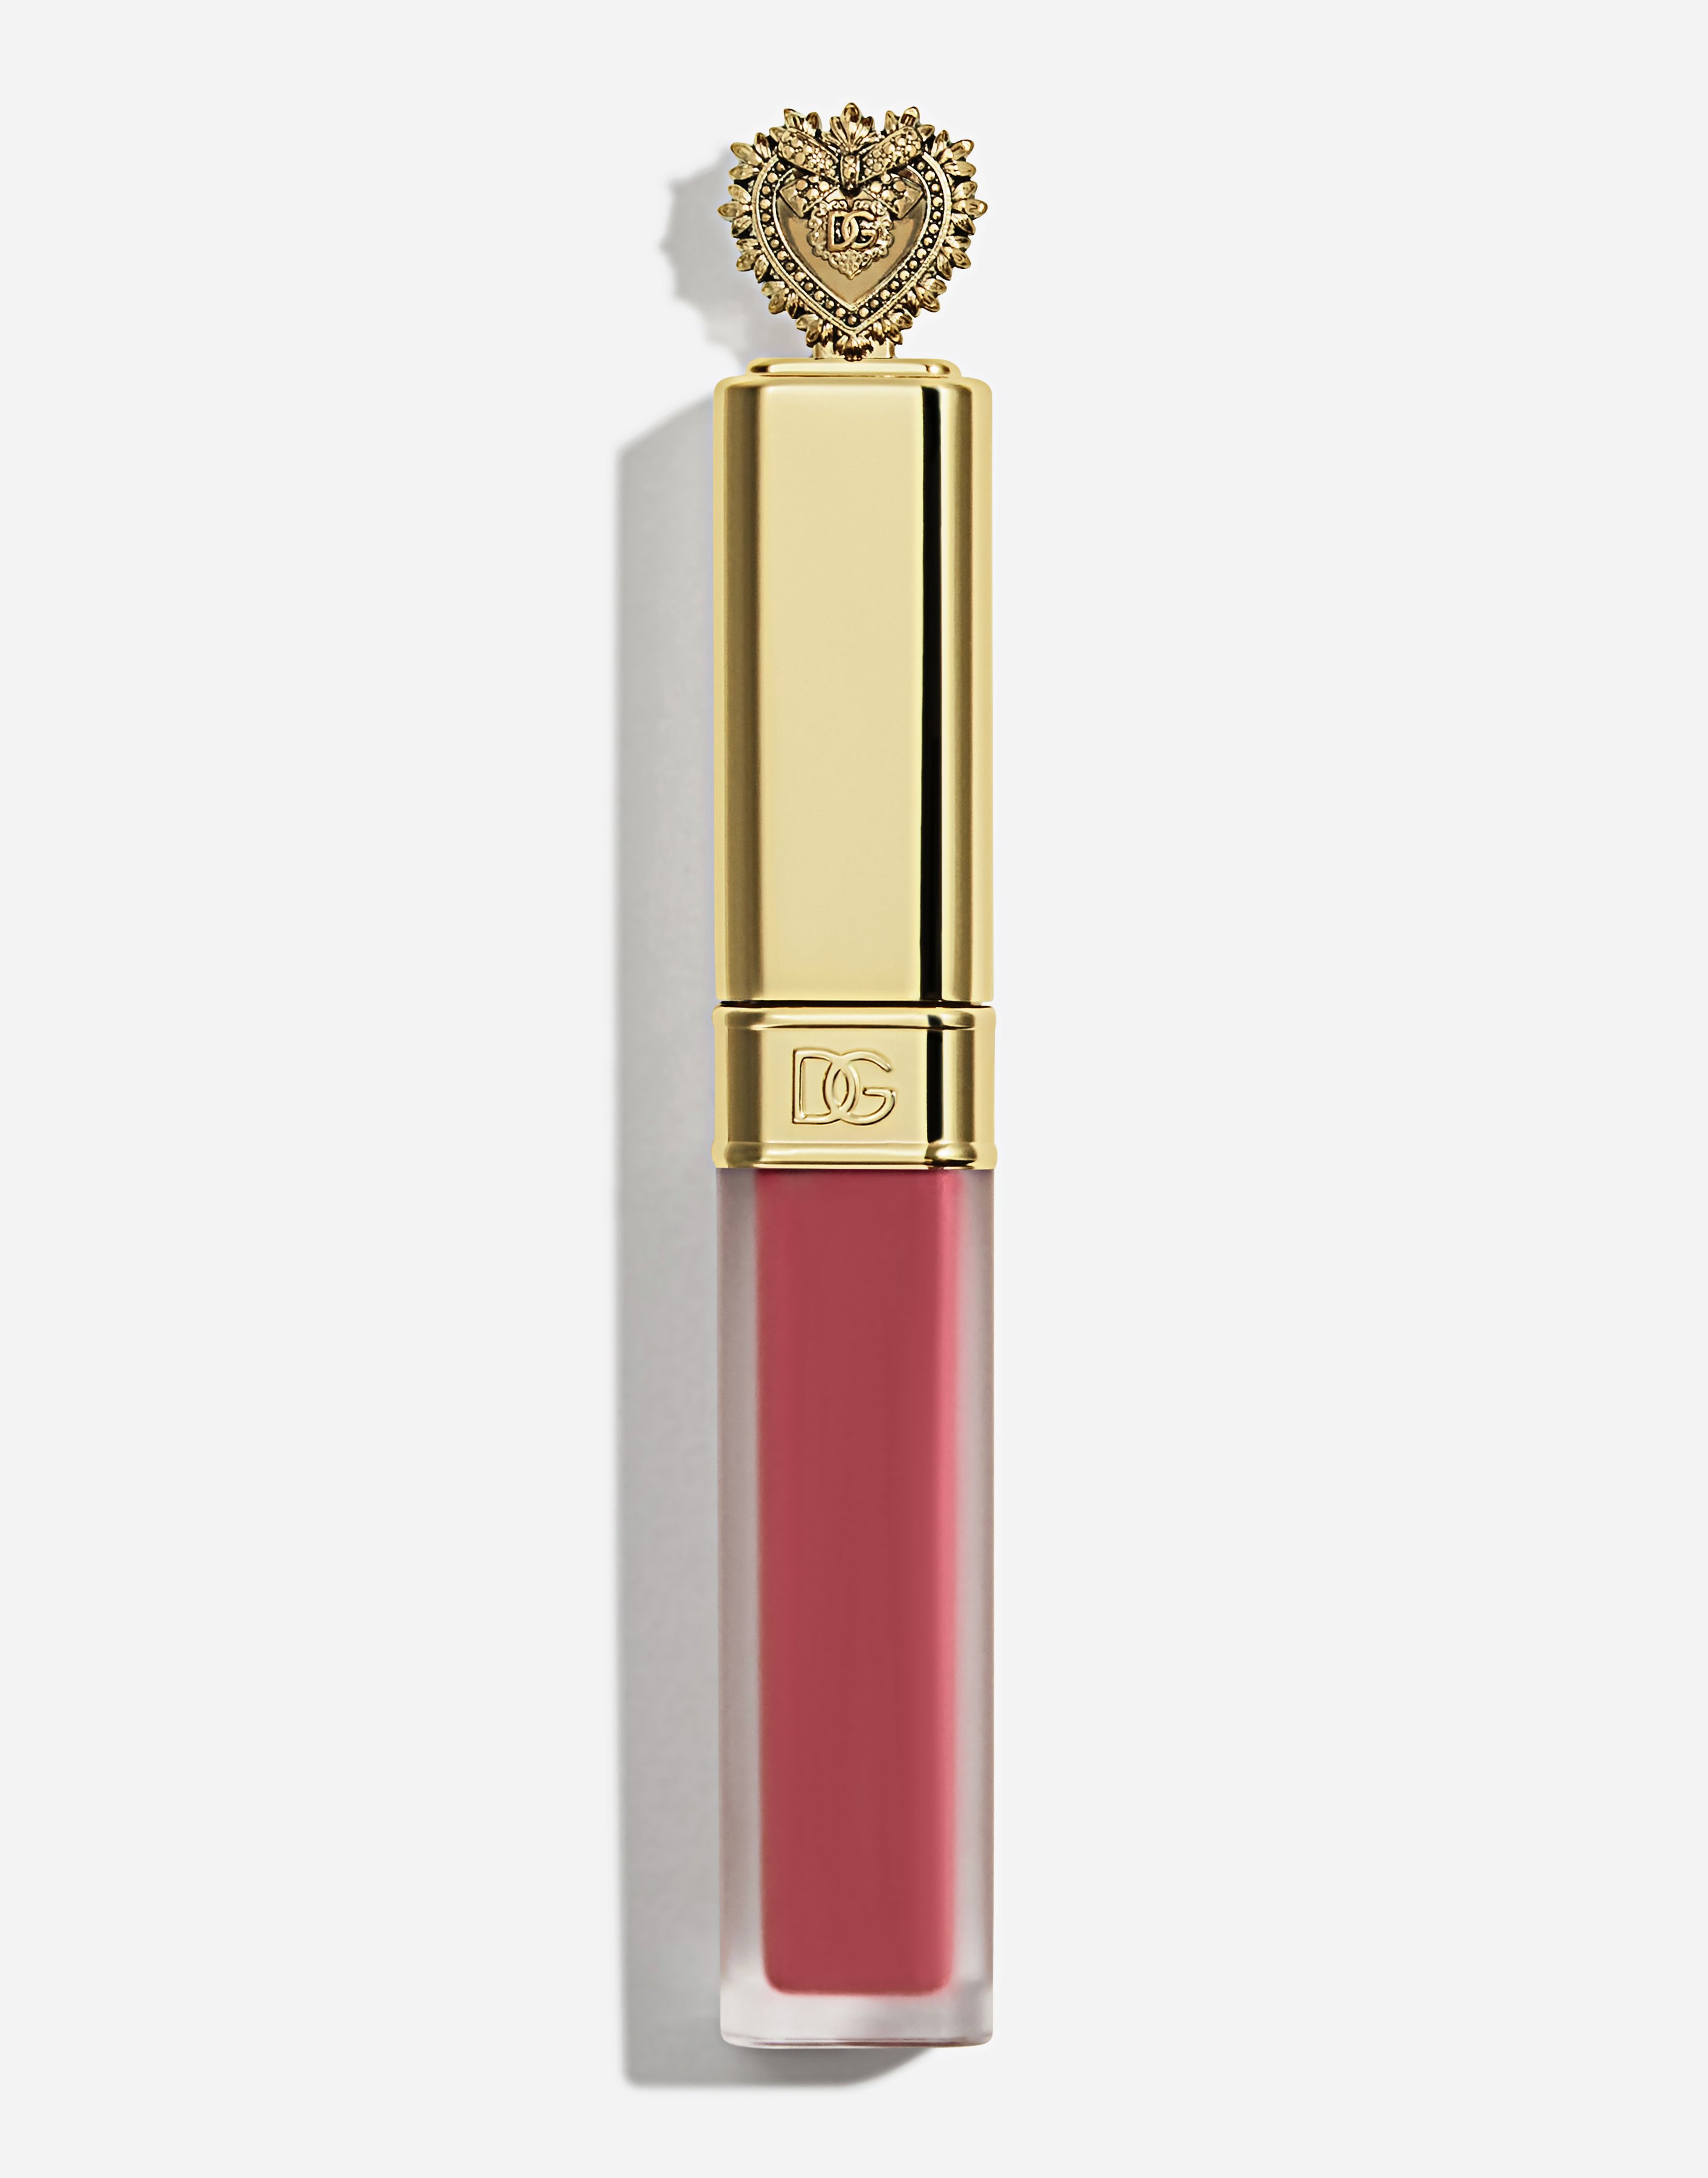 Dolce & Gabbana Devotion Liquid Lipstick In Mousse In 200 Gratitudine